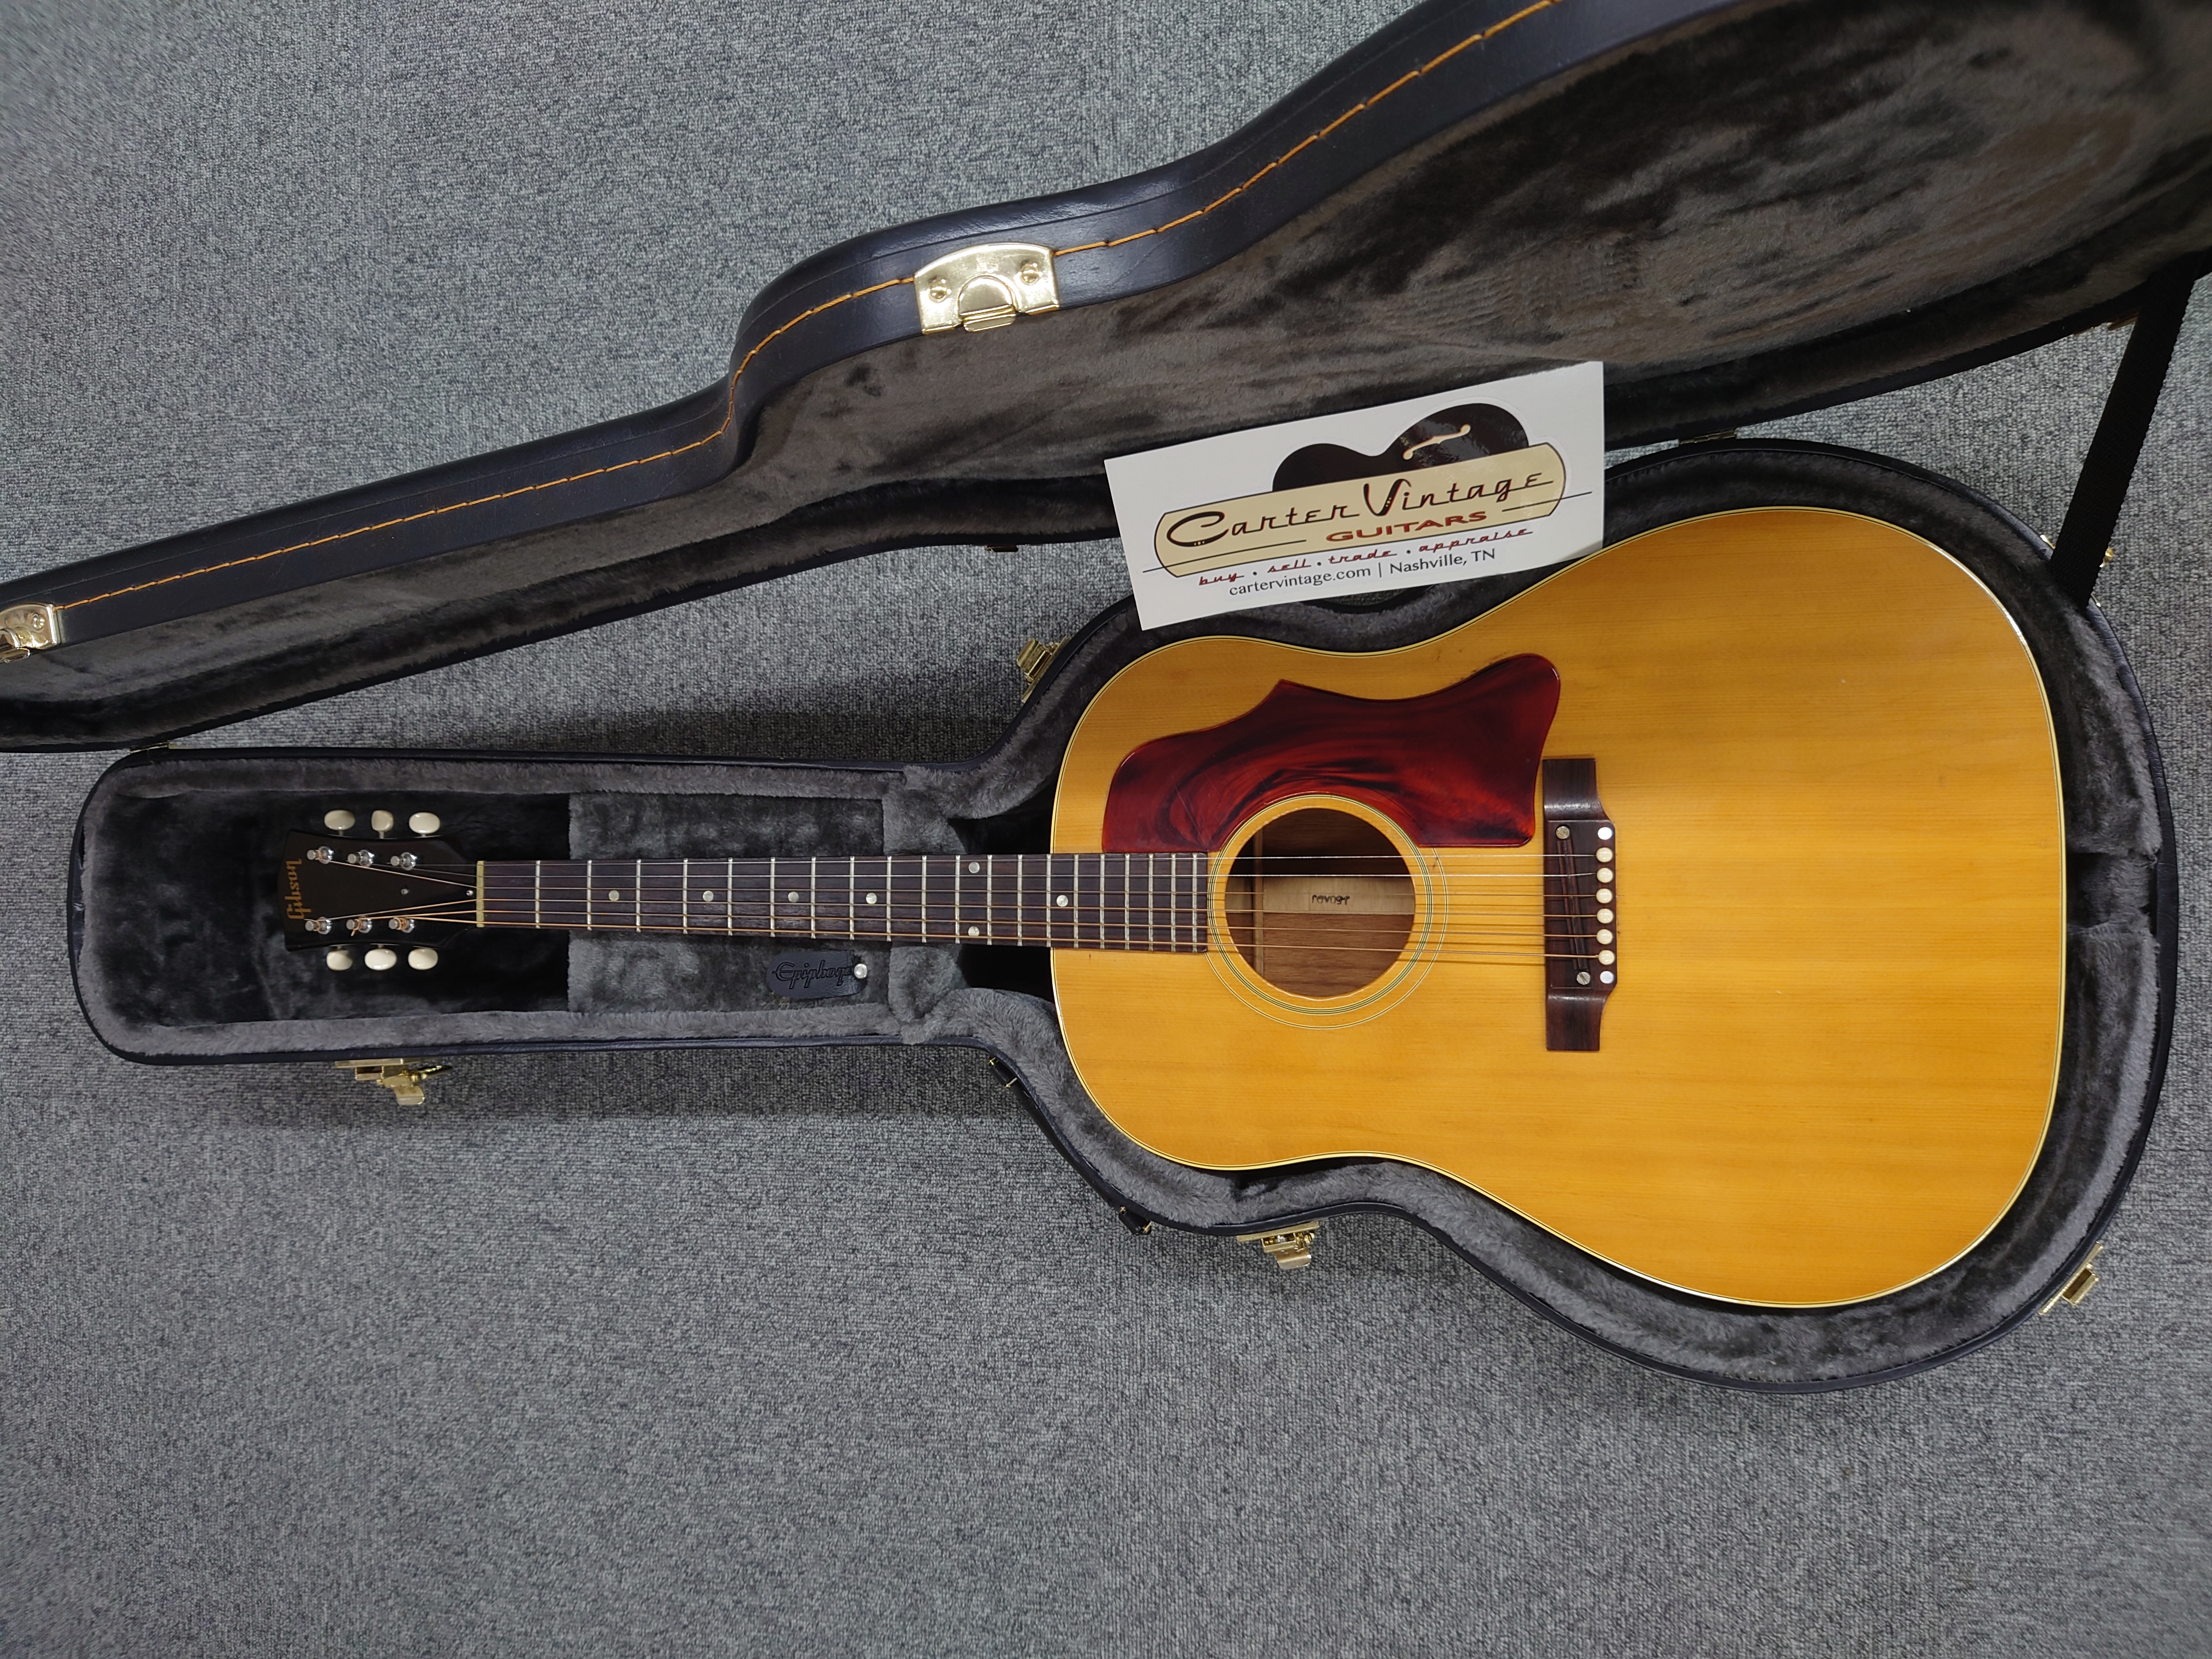 Gibson1968 J-50